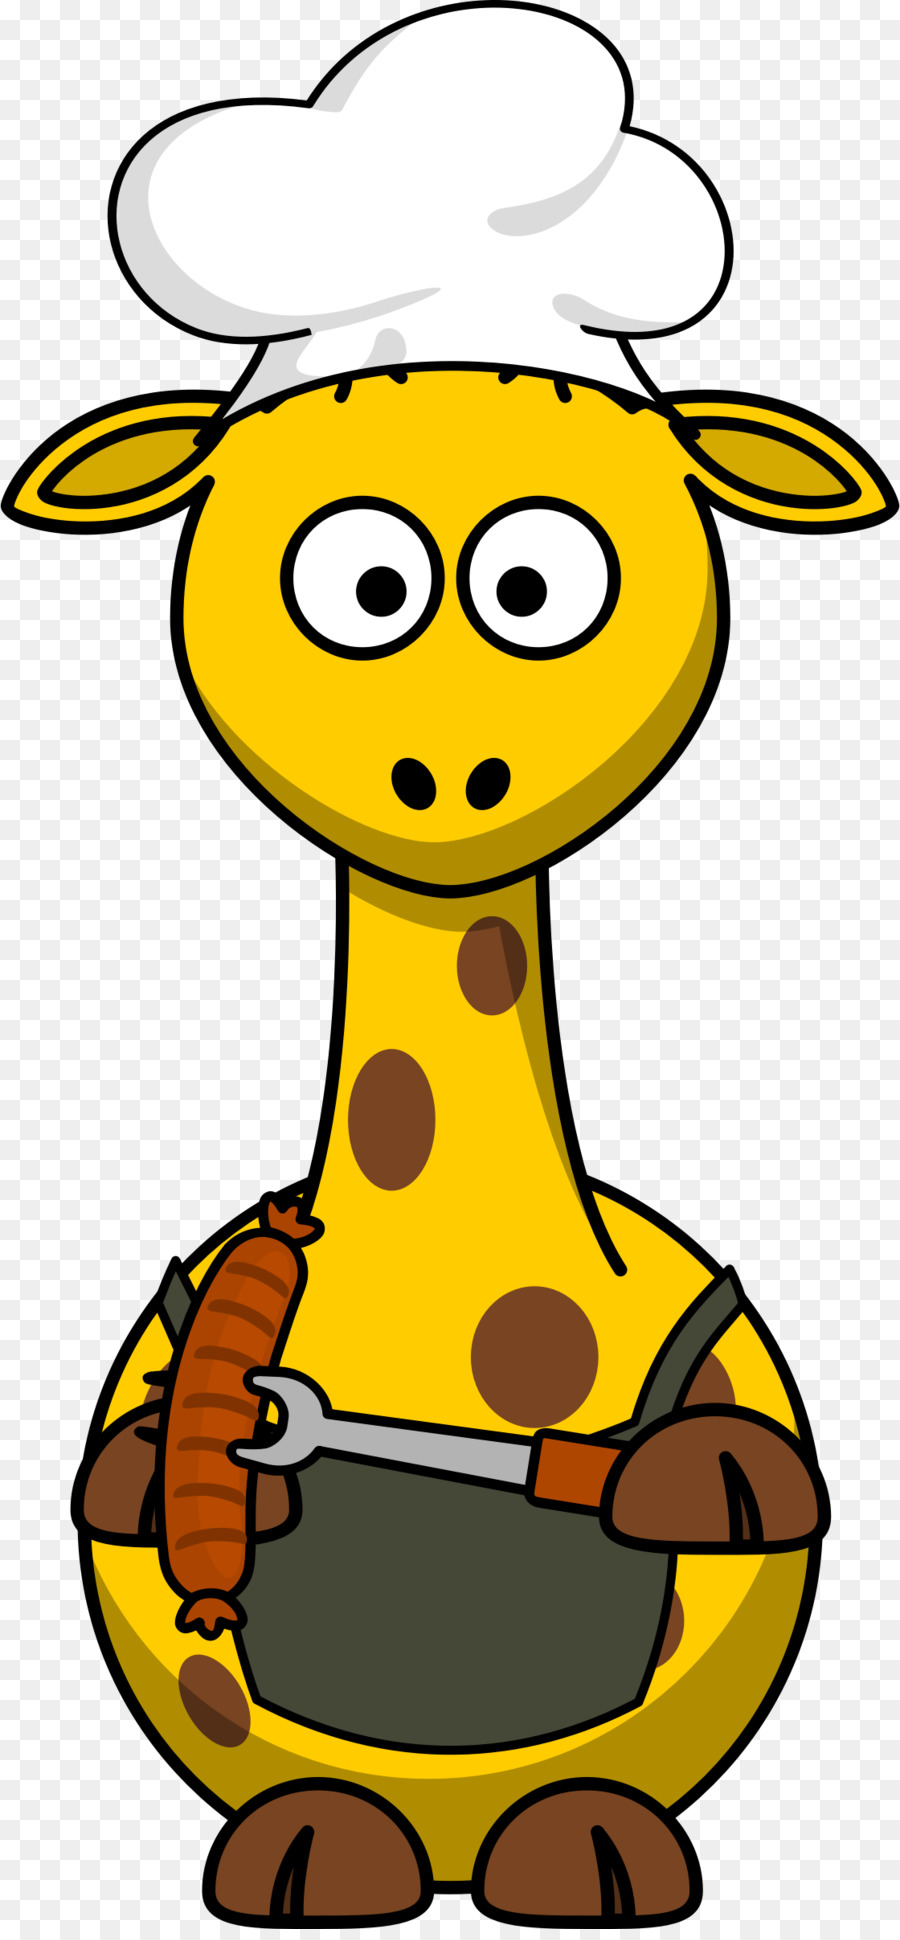 Giraffe Clip art - spareribs-clipart